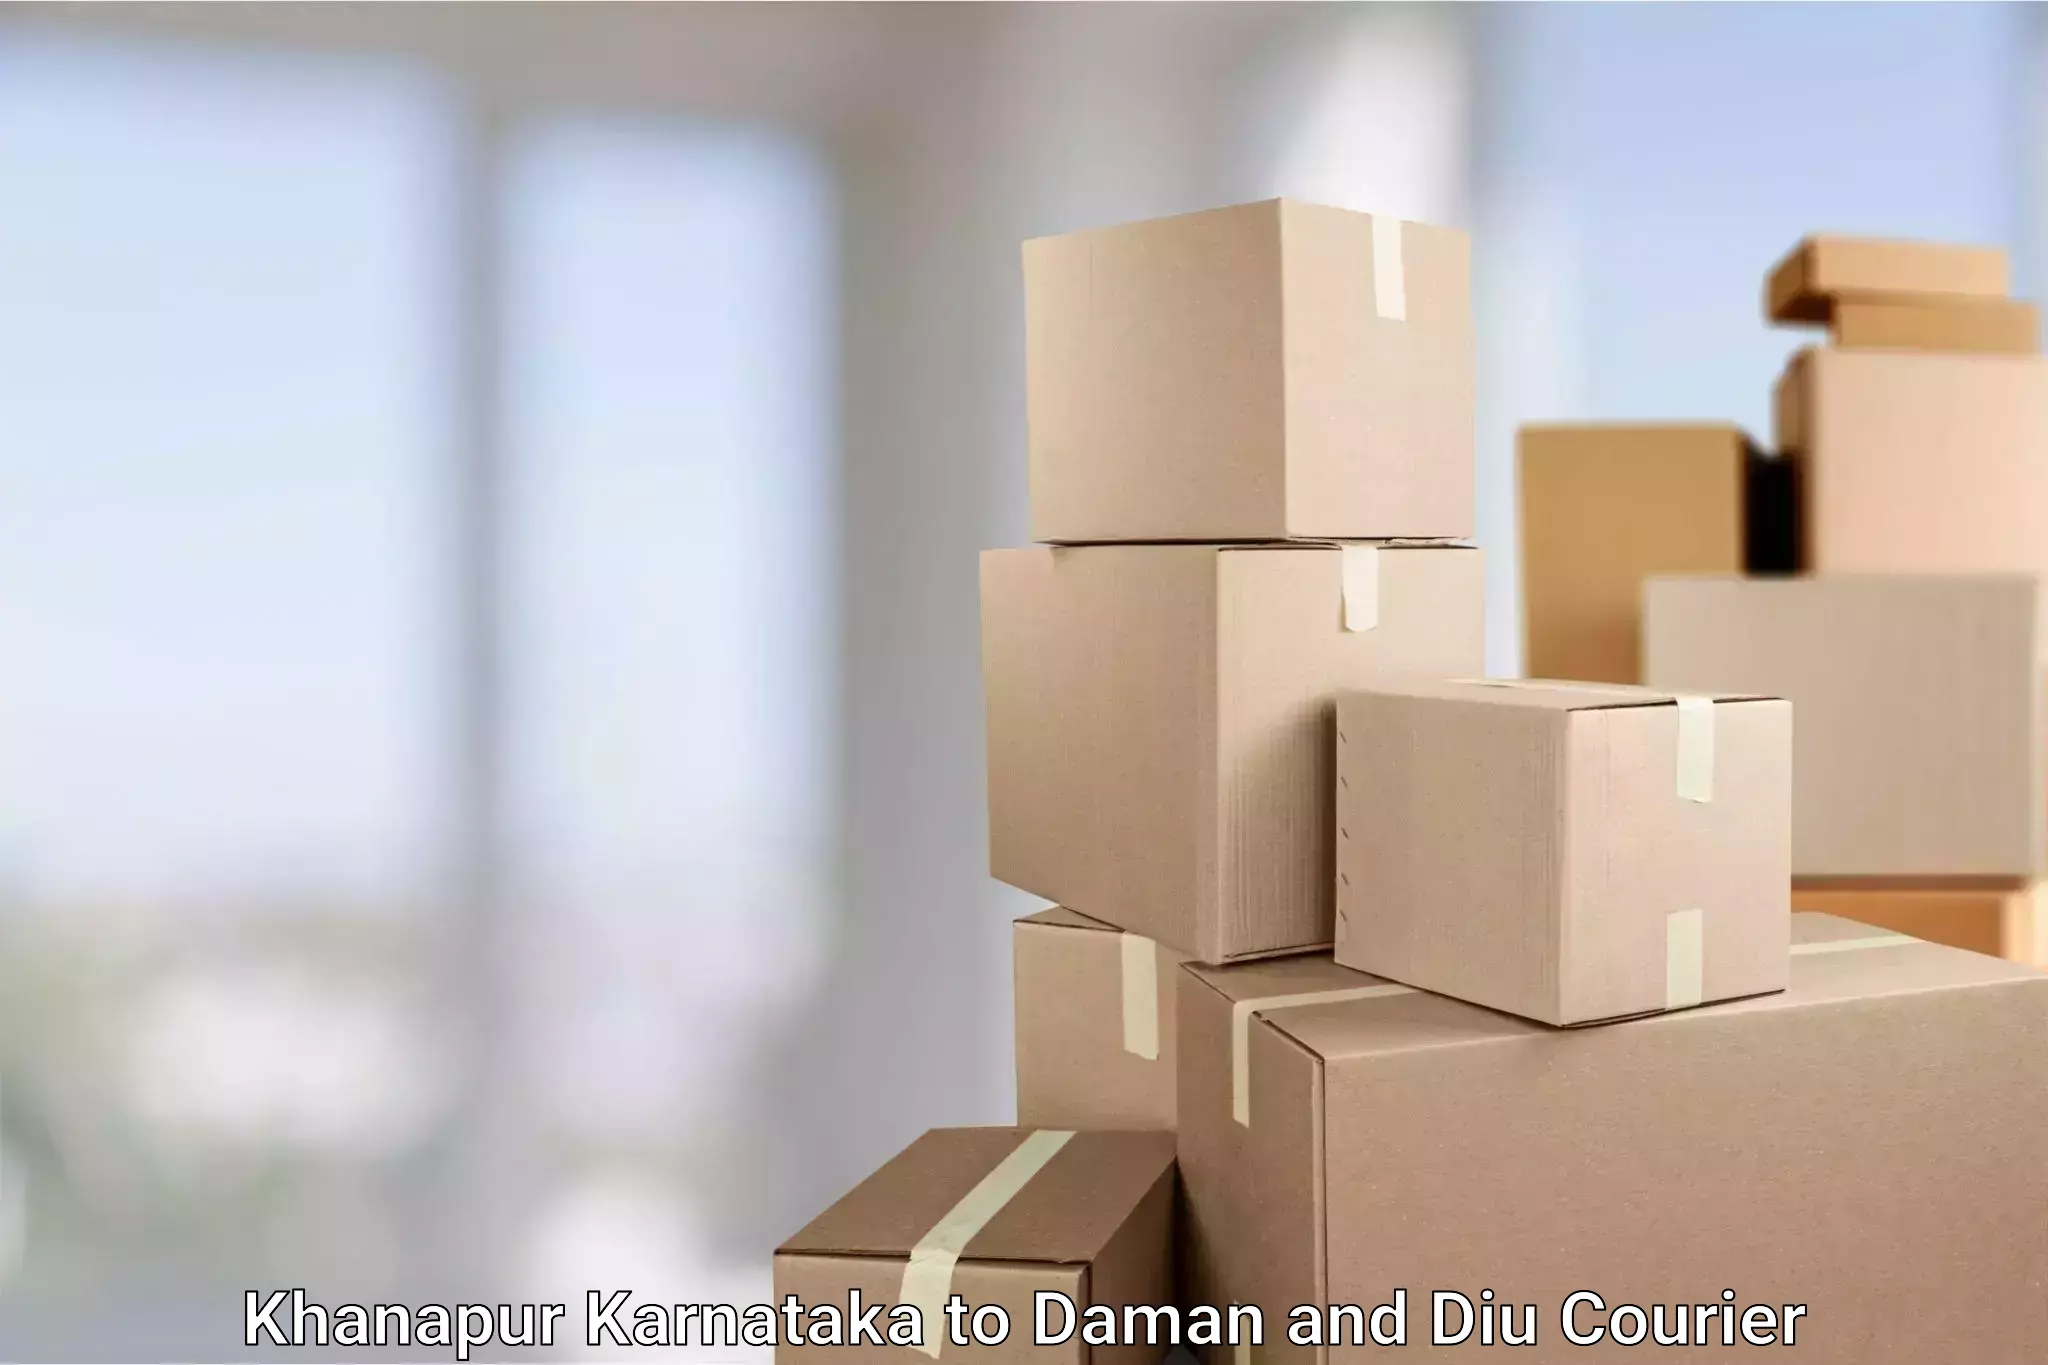 24-hour delivery options Khanapur Karnataka to Daman and Diu